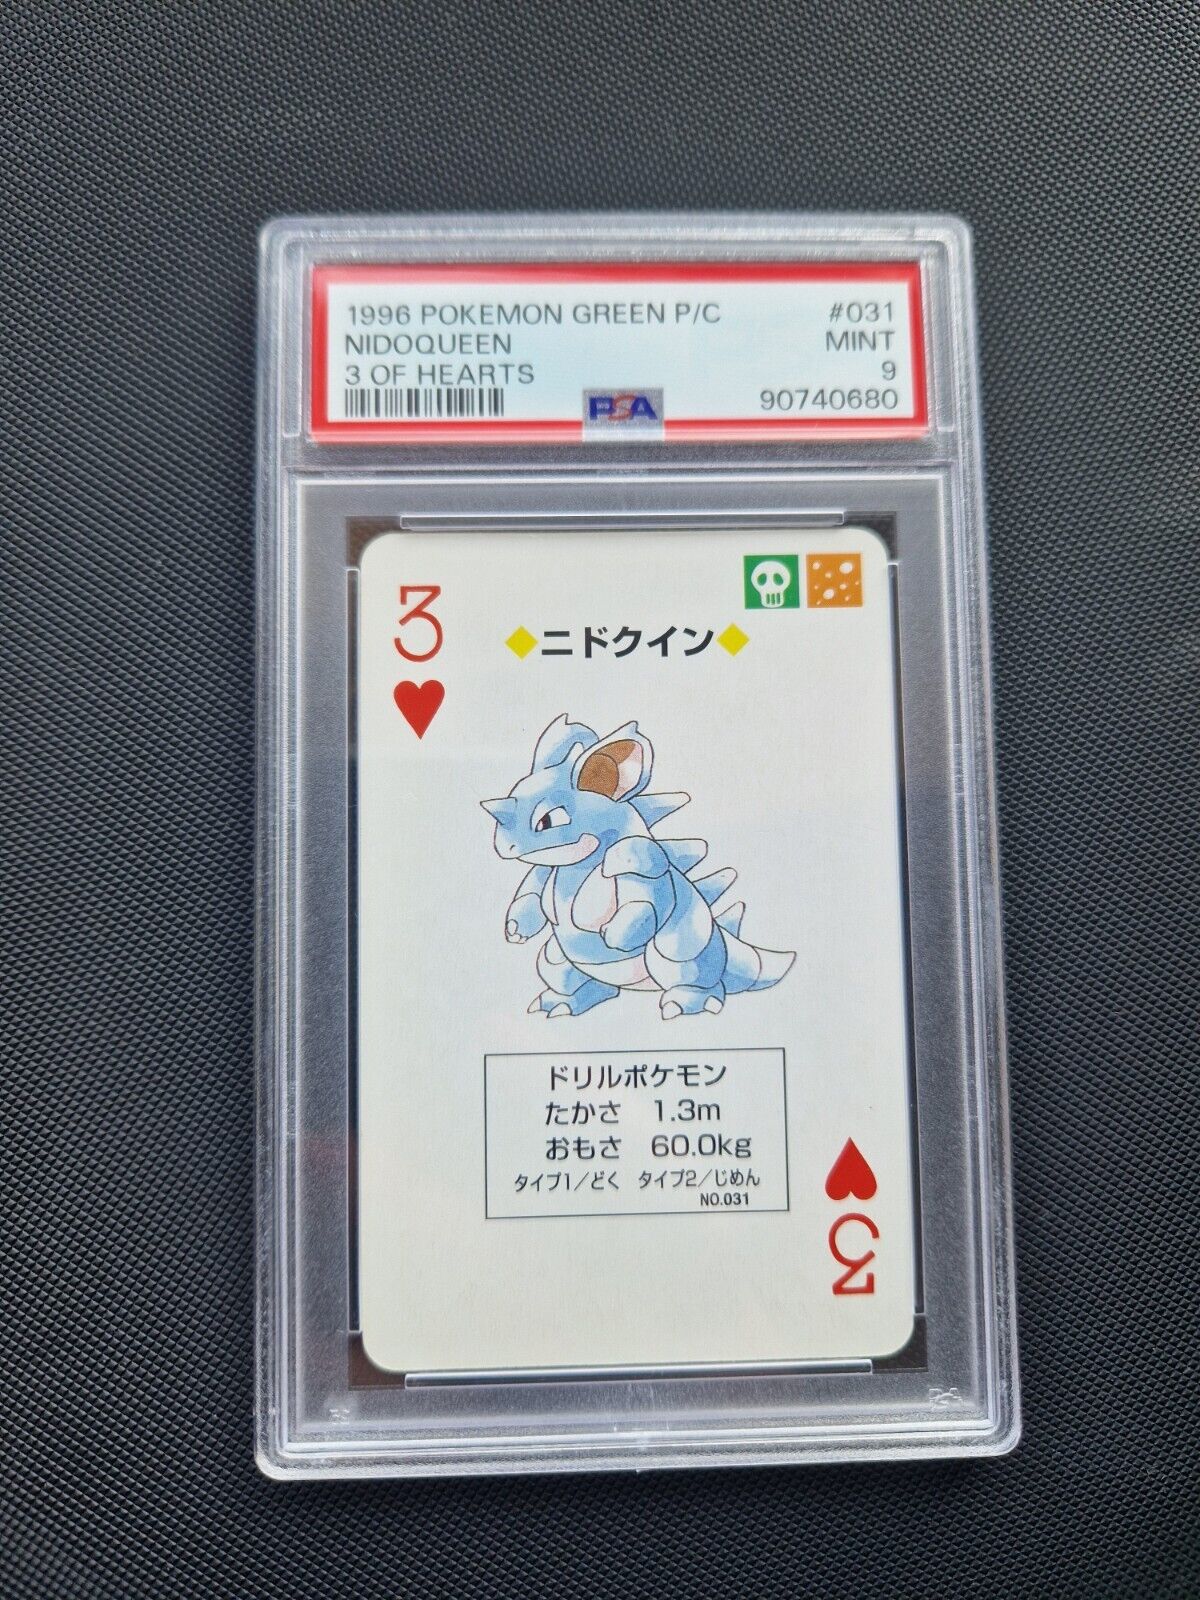 Nidoqueen PSA 9 Pokemon Card No. 031 Green Poker 3 Of Hearts 1996 MINT Venusaur 